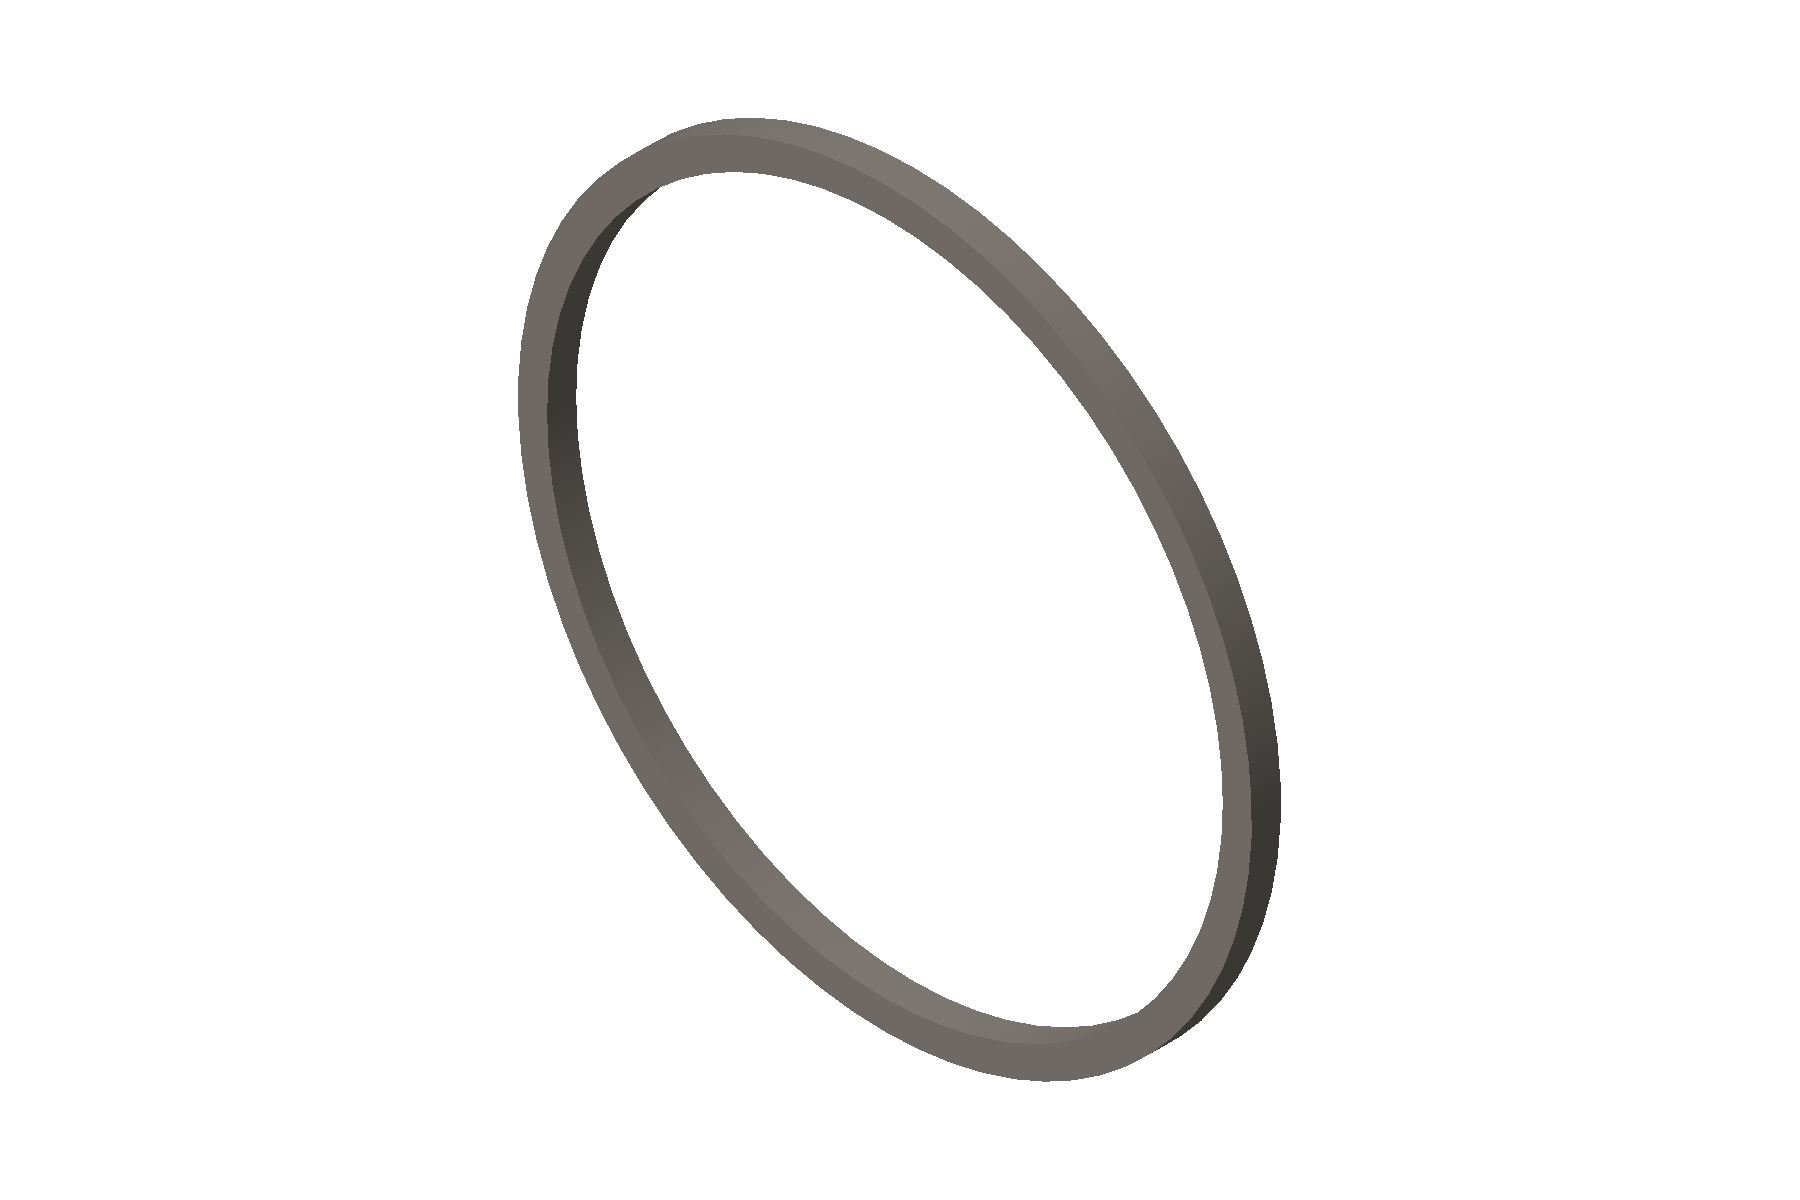 (NEW OLD STOCK) 164159 - Cummins Rectangular Ring Seal